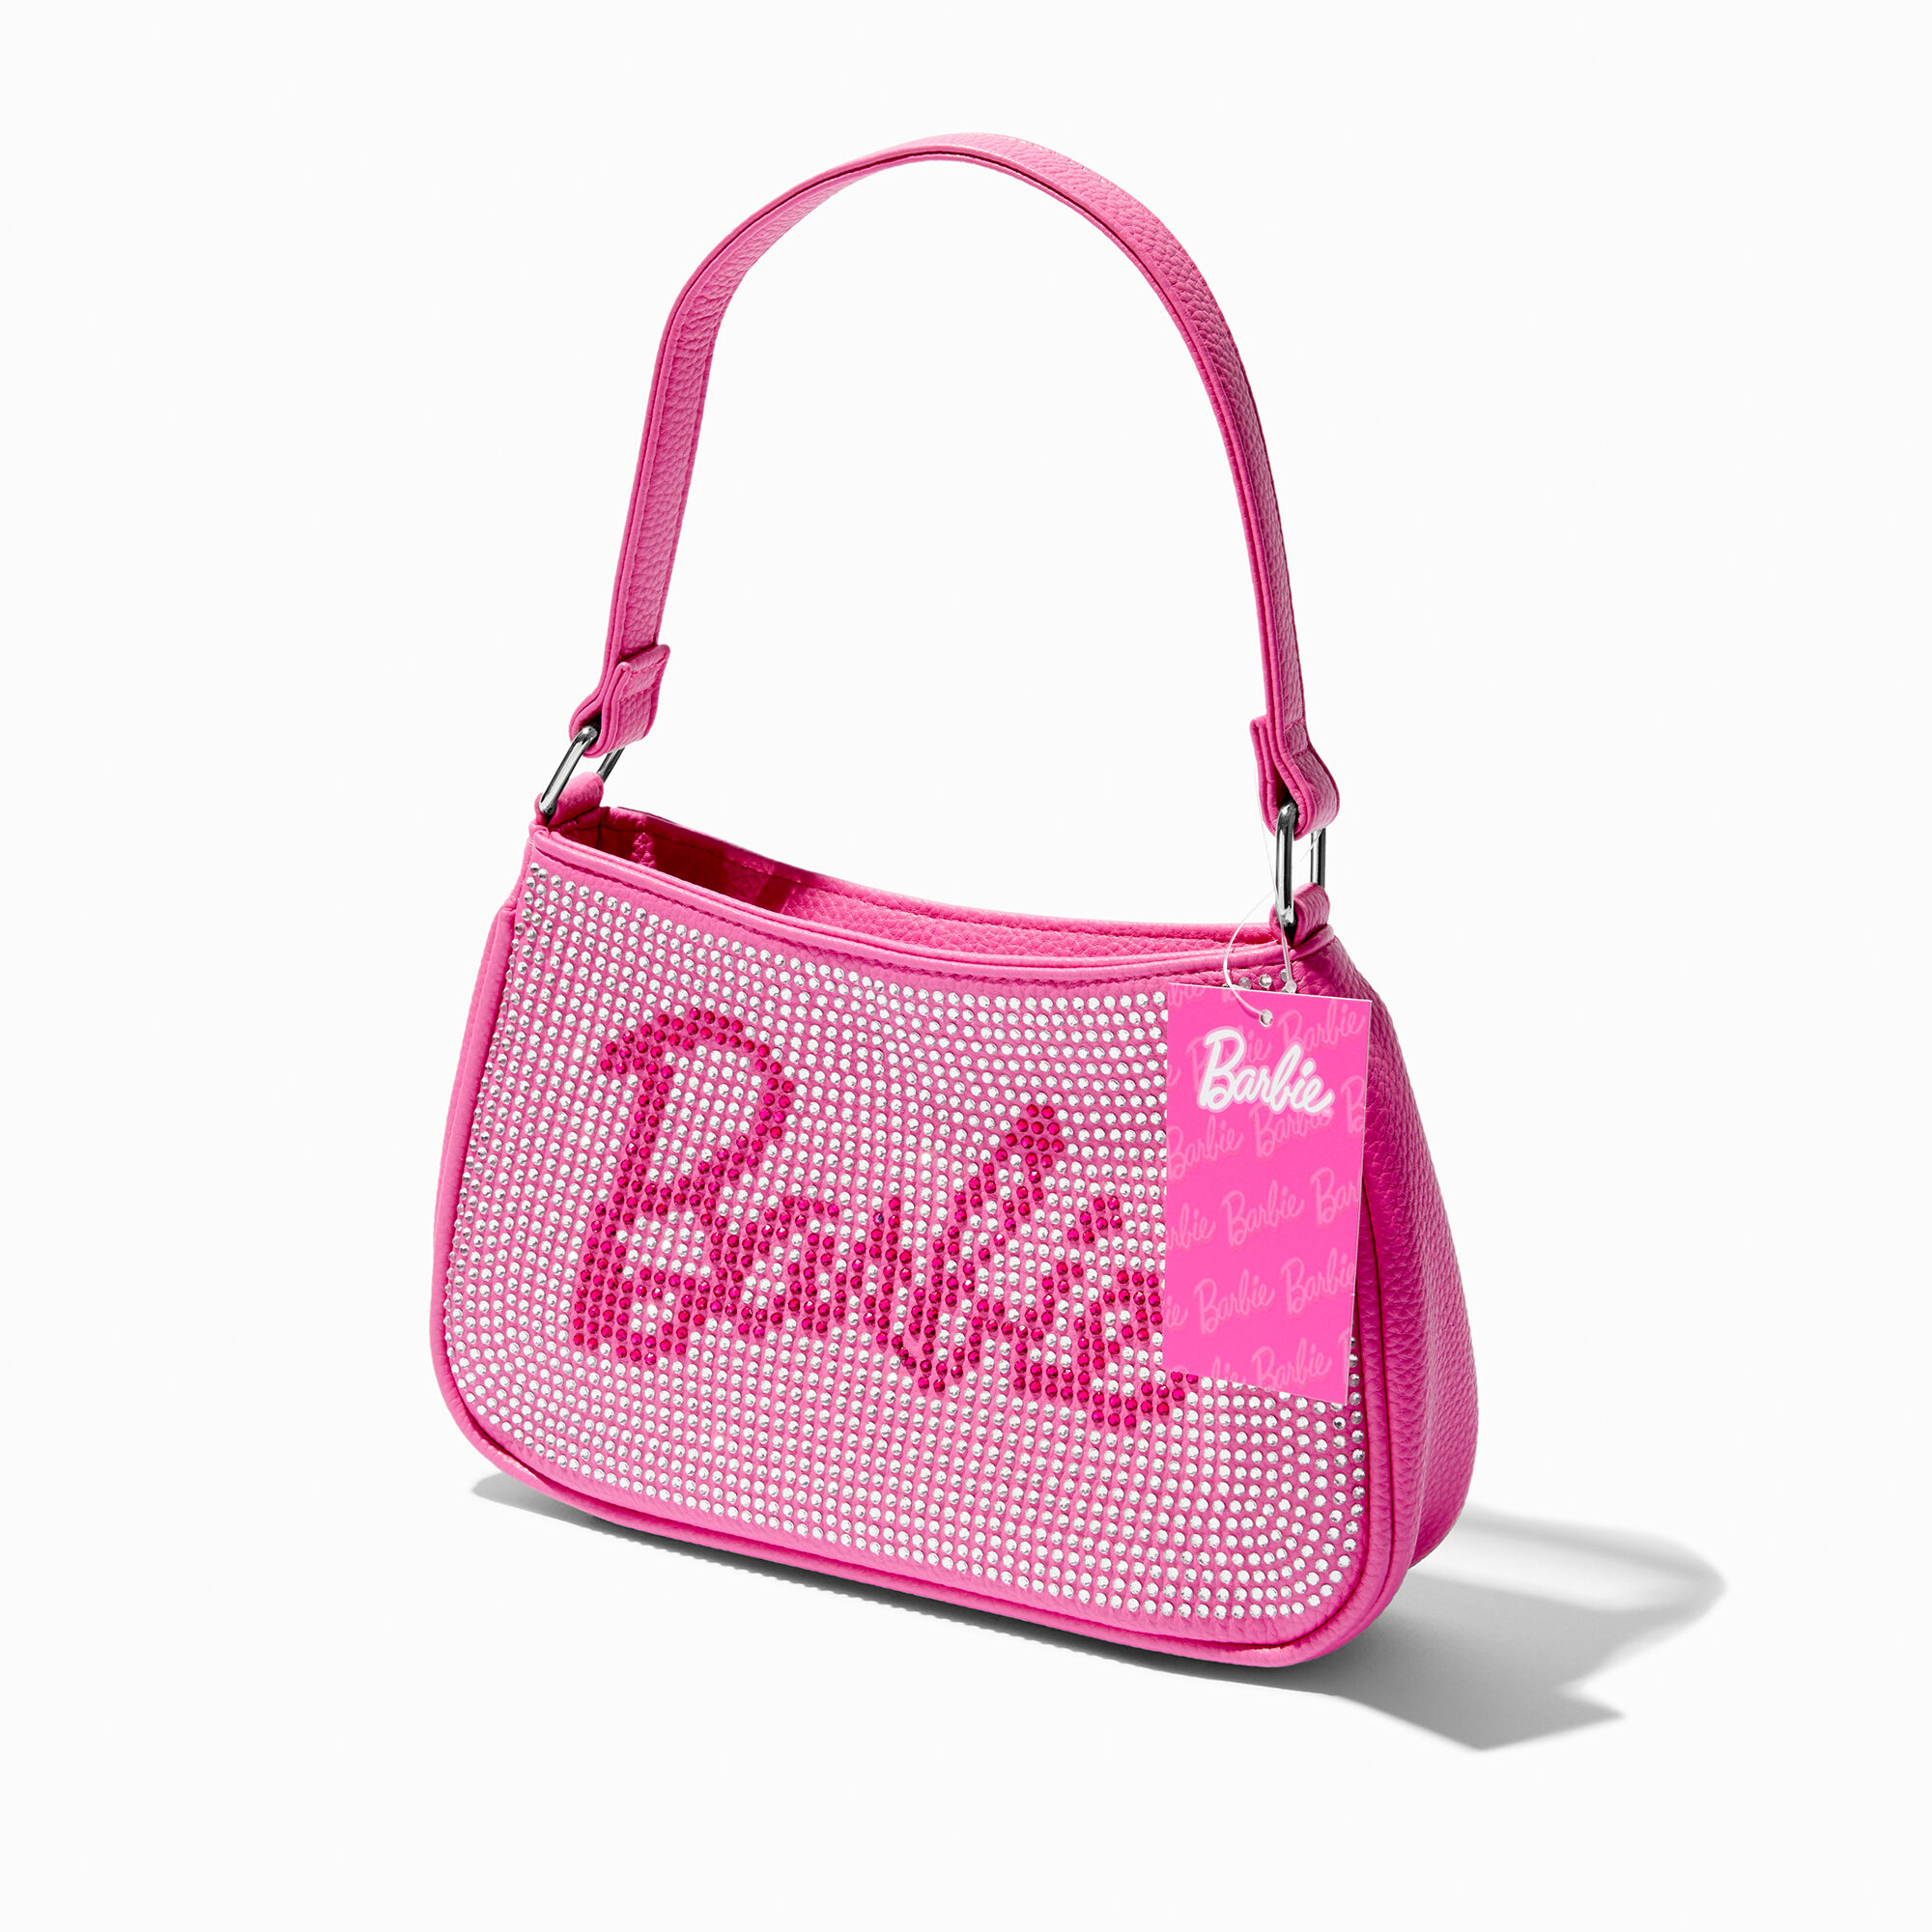 View Claires Barbie Diamante Shoulder Bag Pink information